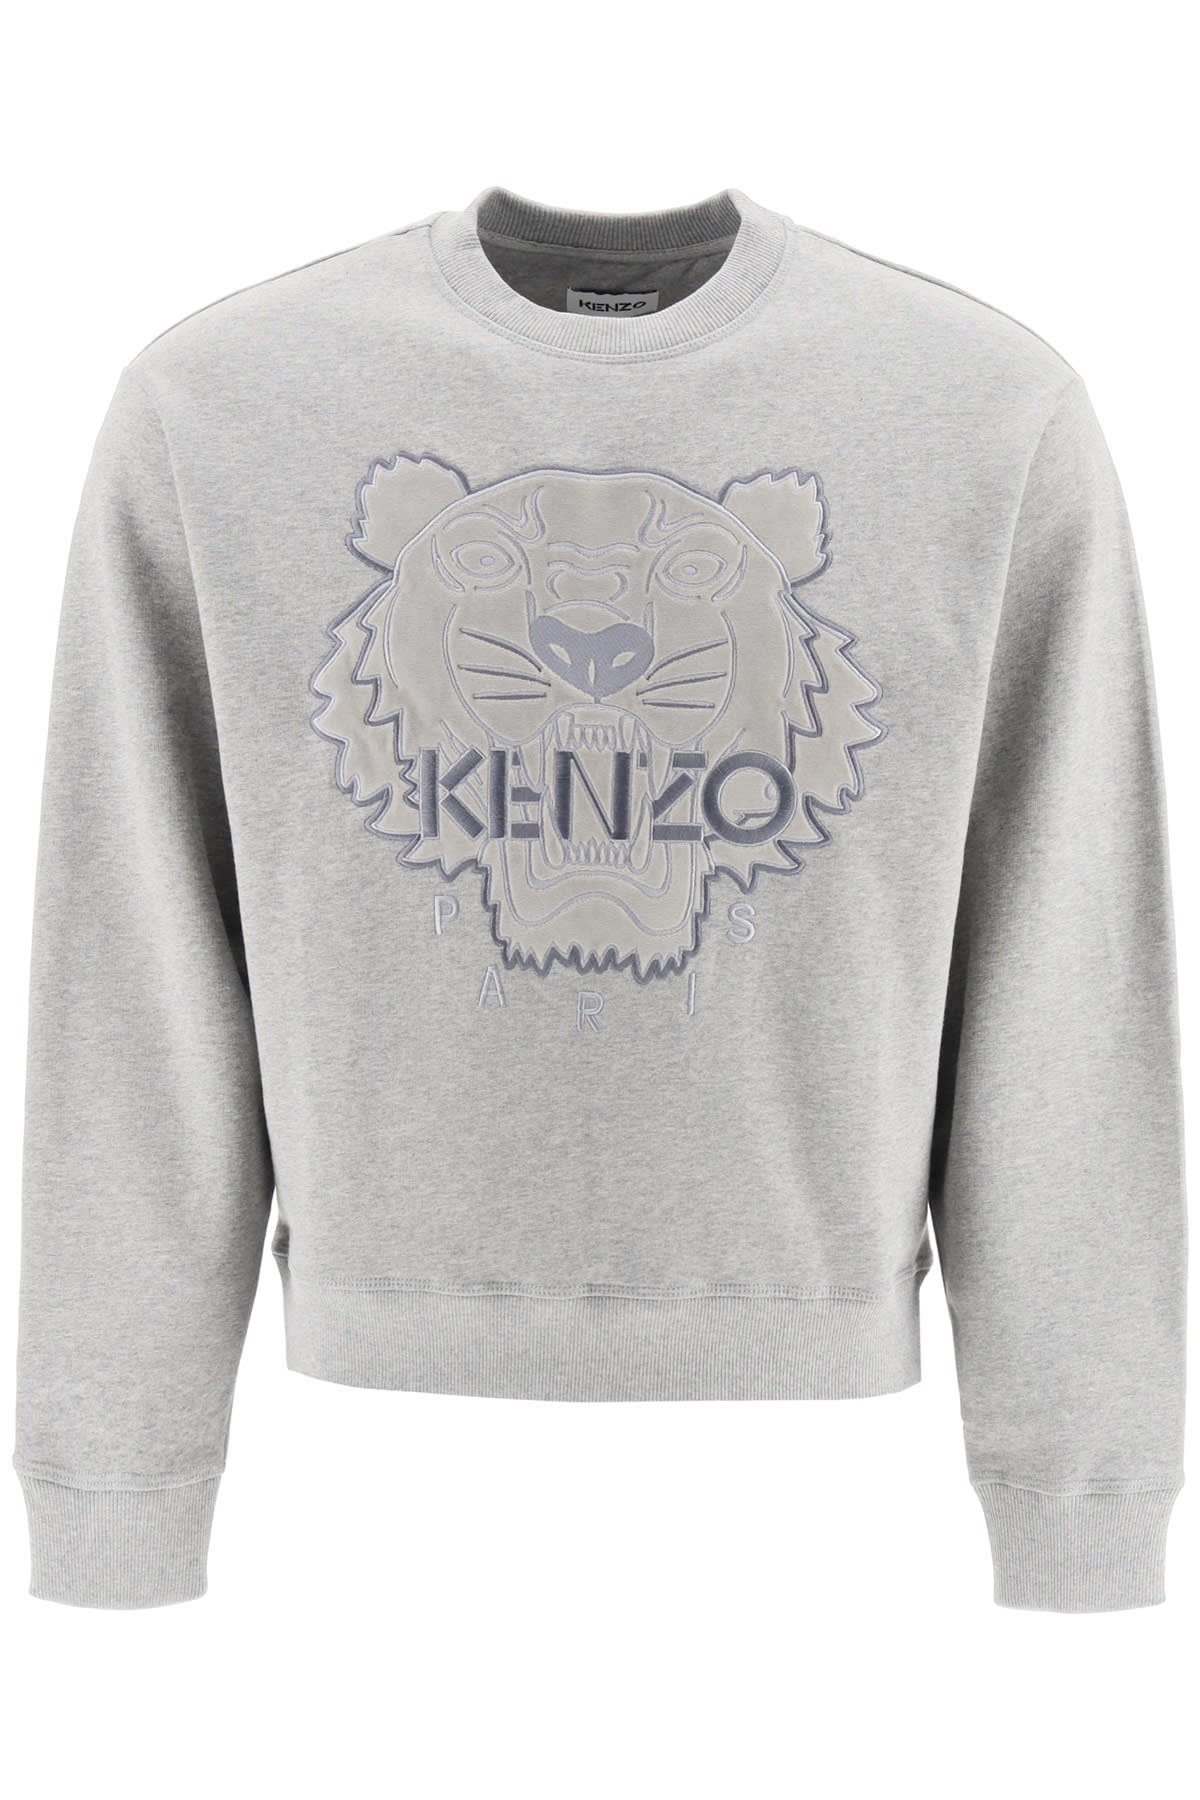 Kenzo Tiger Crew Neck Sweatshirt